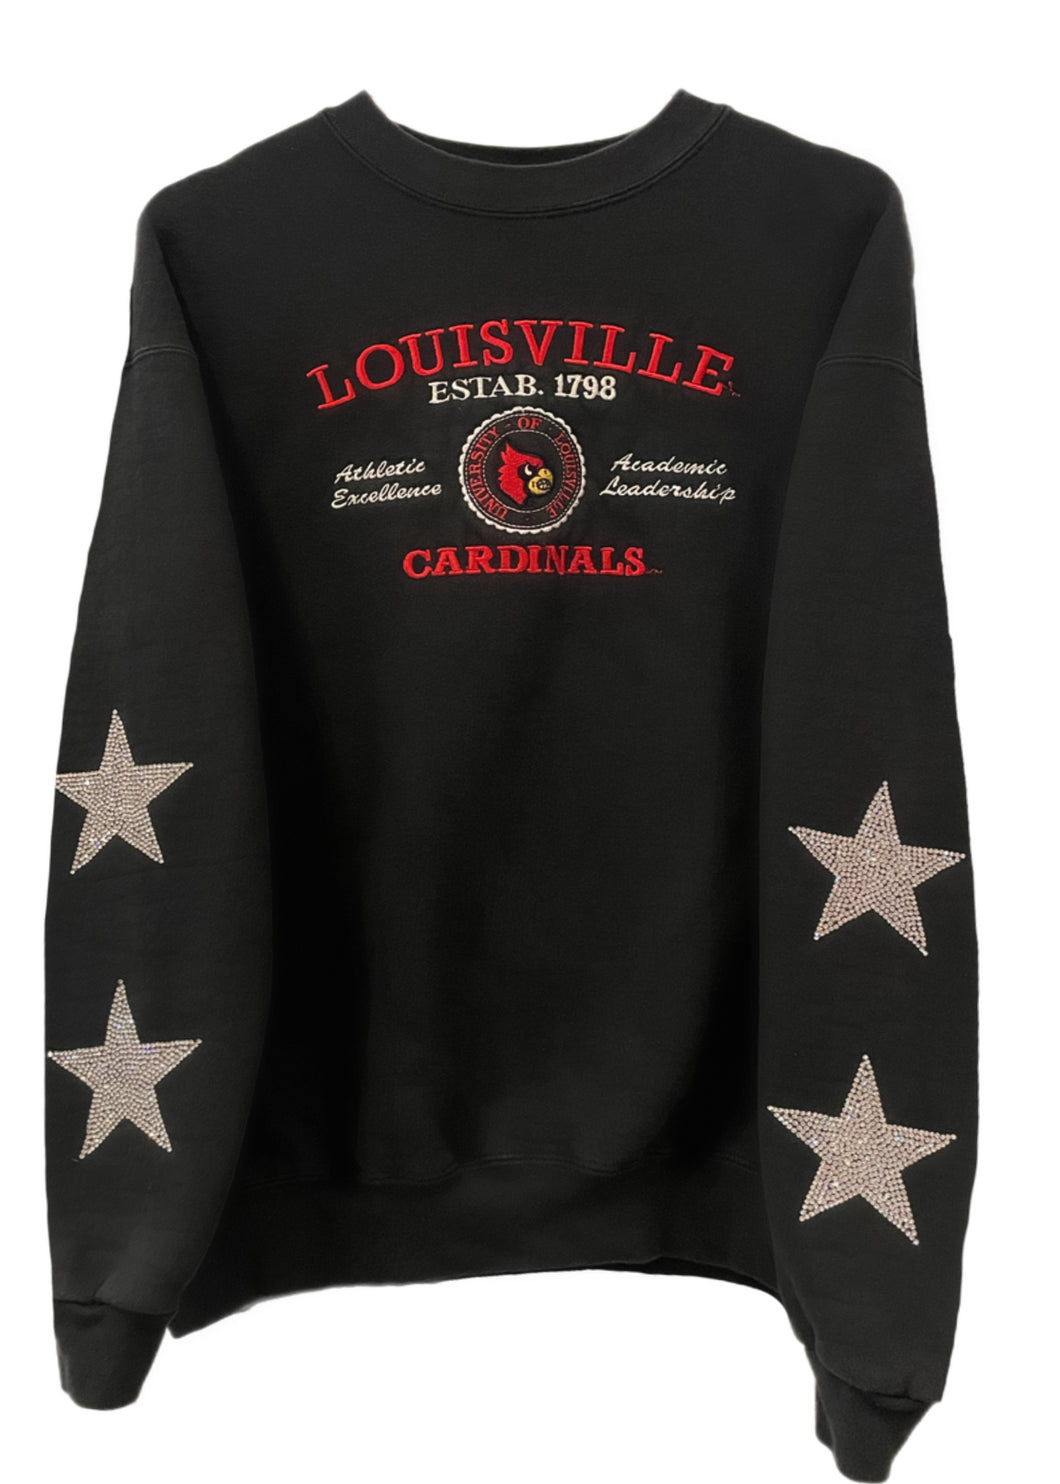 Vintage University of Louisville Cardinals T-Shirt / Sweatshirt